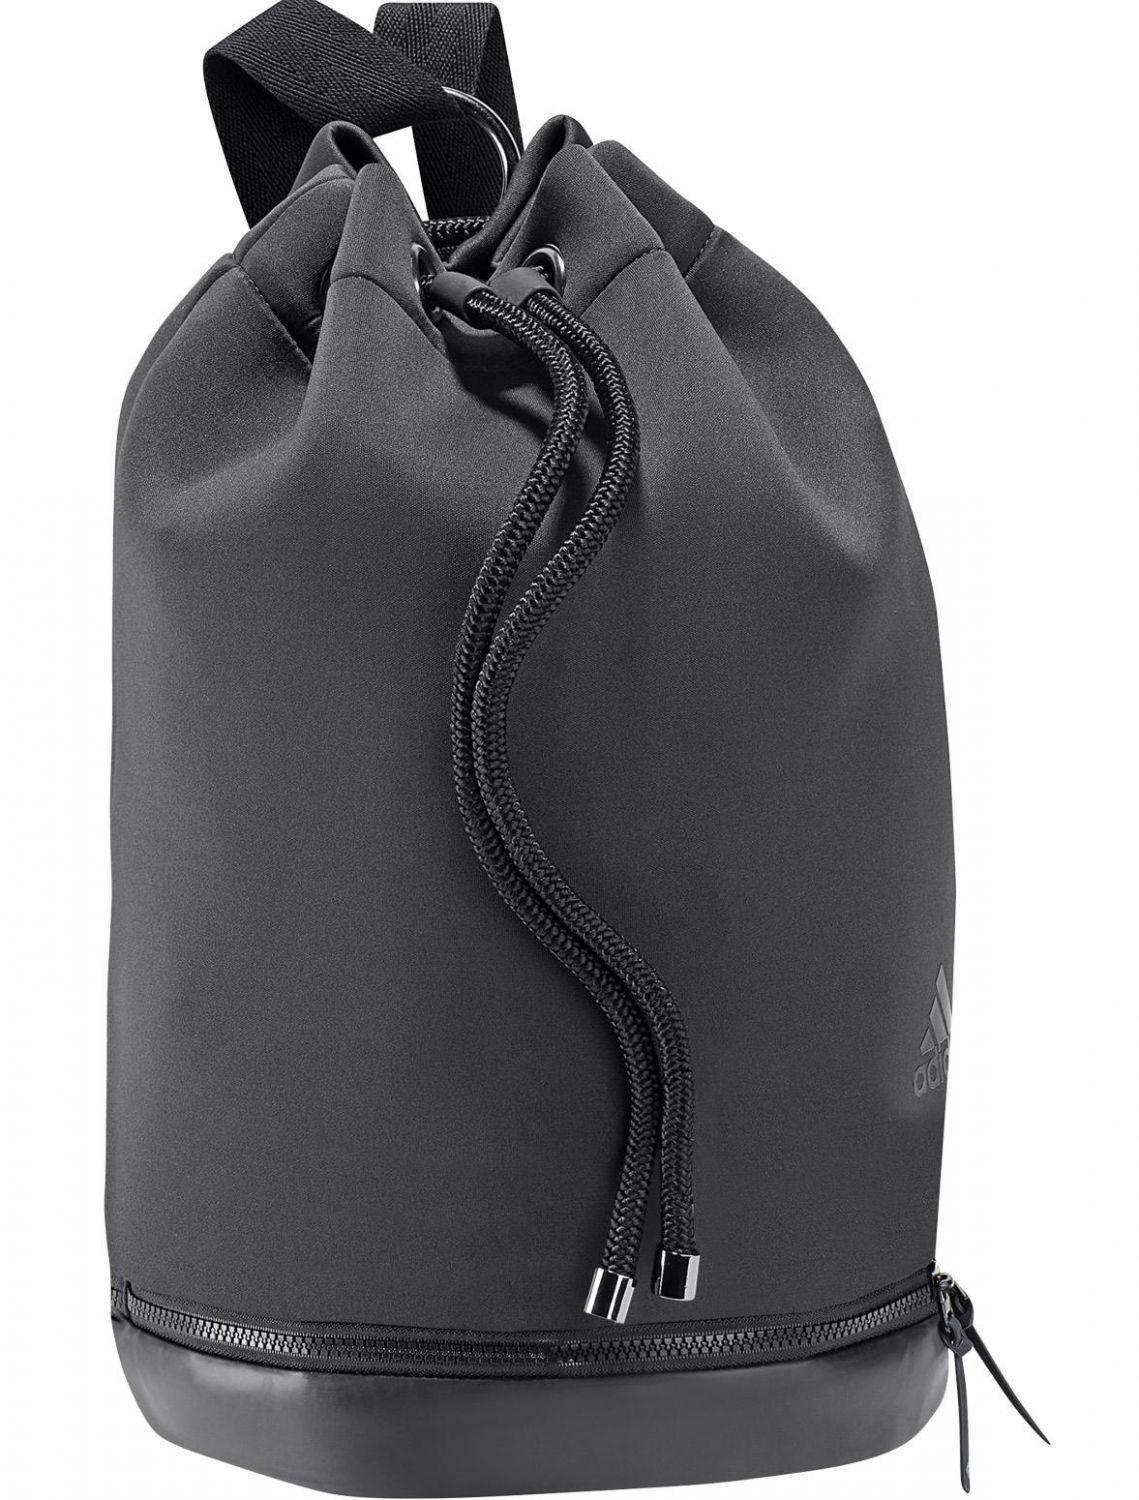 Adidas Fav Seasack Rucksack, 25 cm, liters, Grau (Carbon/Negro)